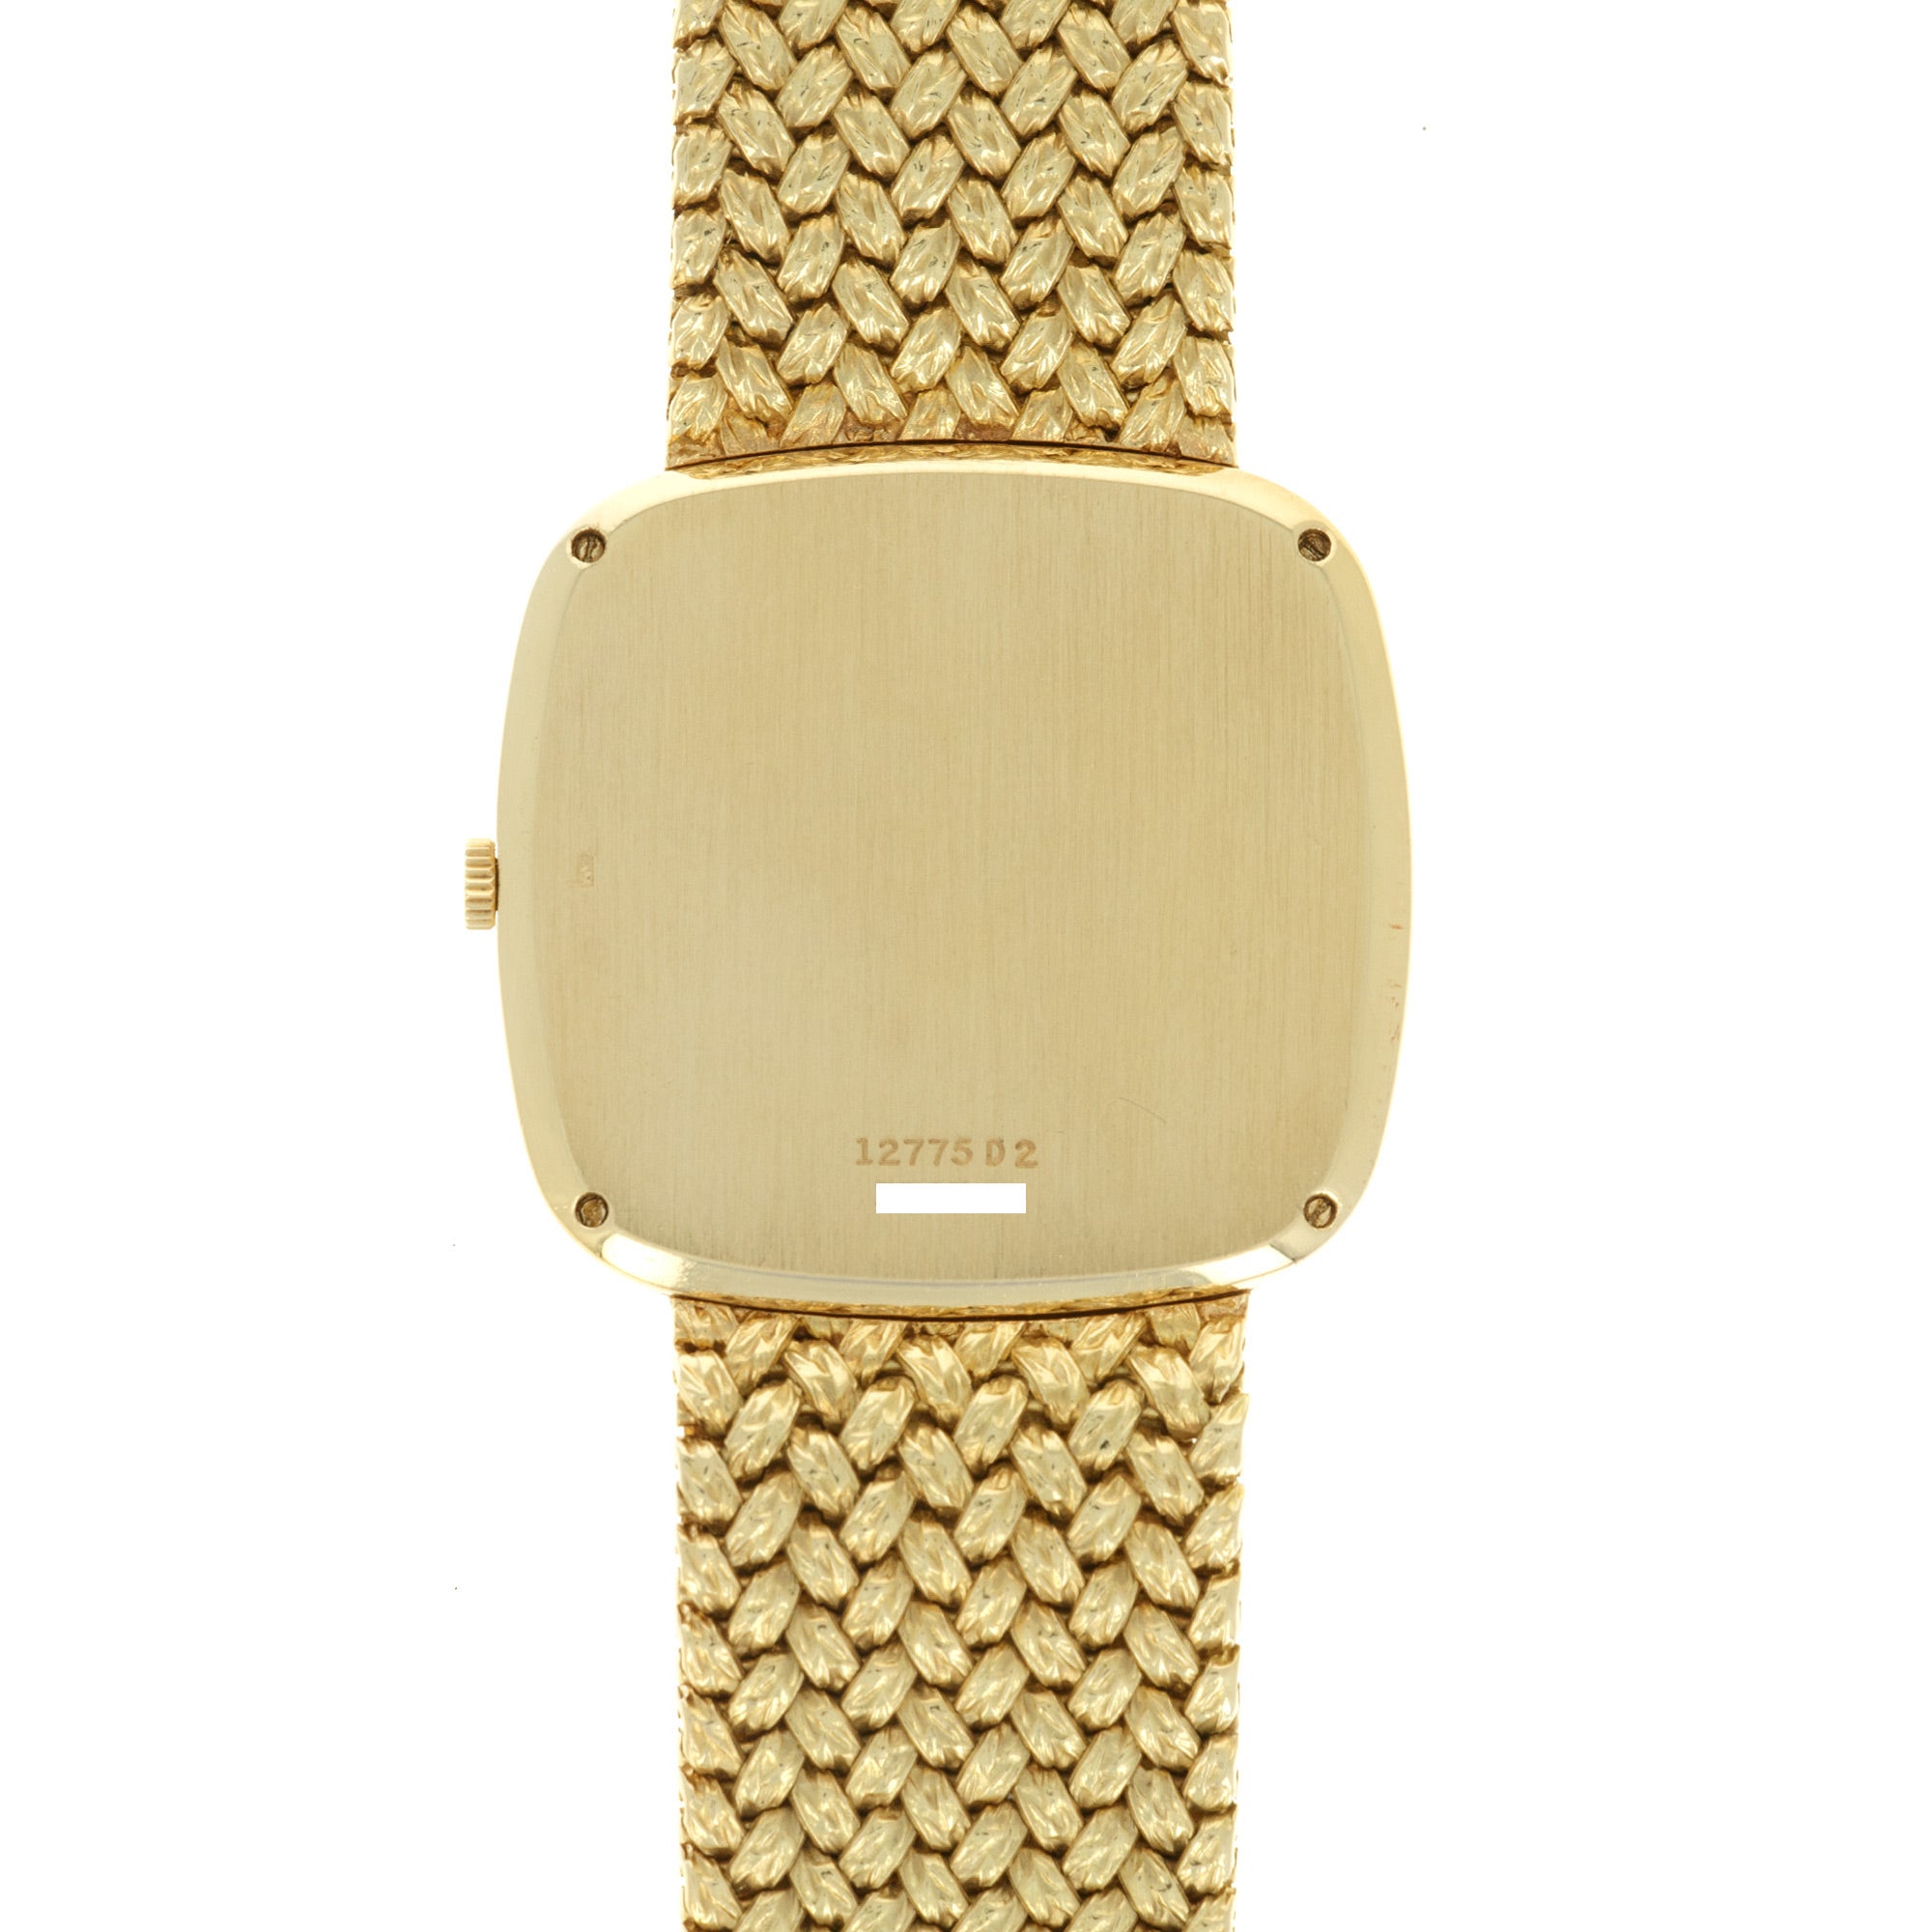 Piaget - Piaget Yellow Gold Onyx Diamond Watch, 1970s - The Keystone Watches